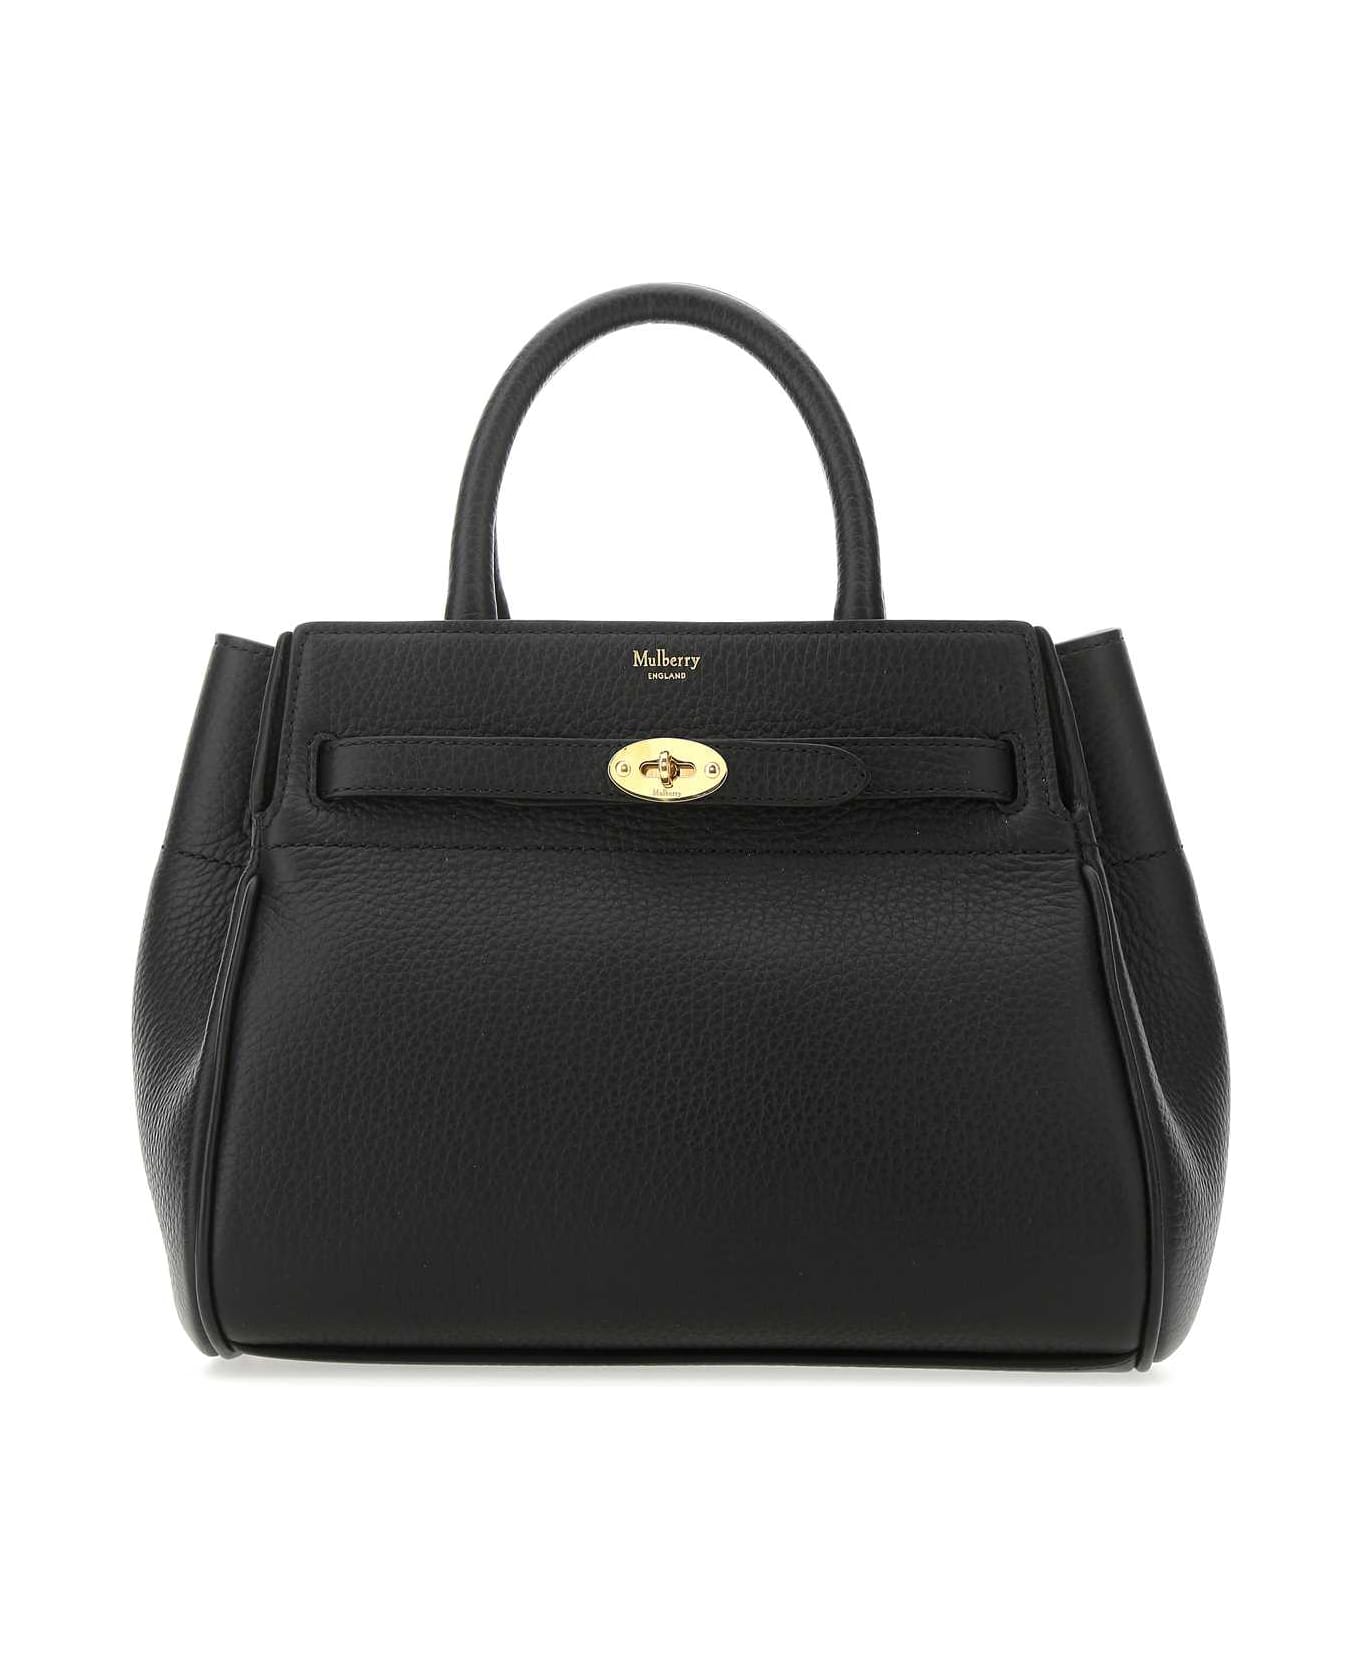 Mulberry Black Leather Small Bayswater Handbag | italist, ALWAYS LIKE A ...